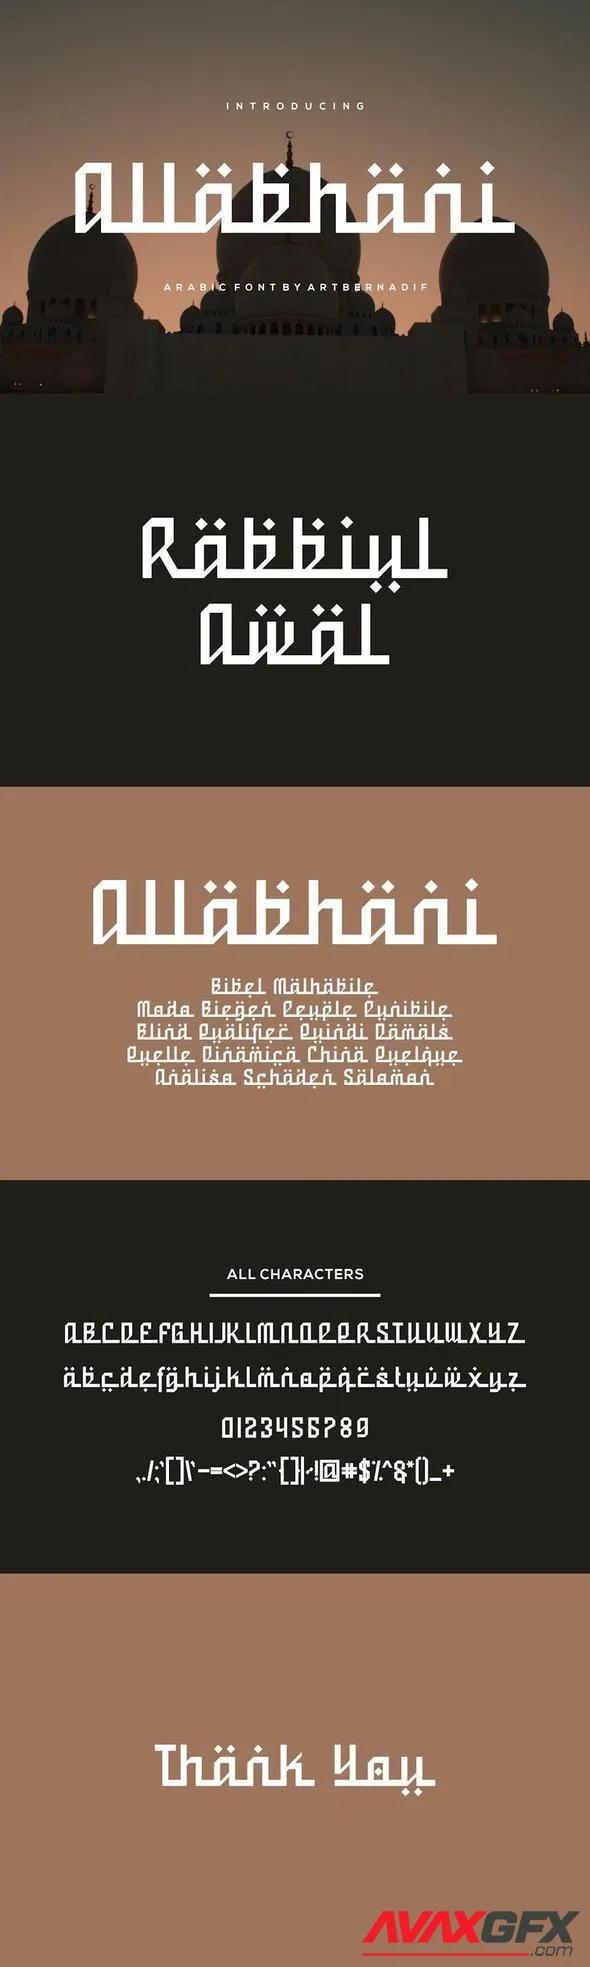 Allabhani Font